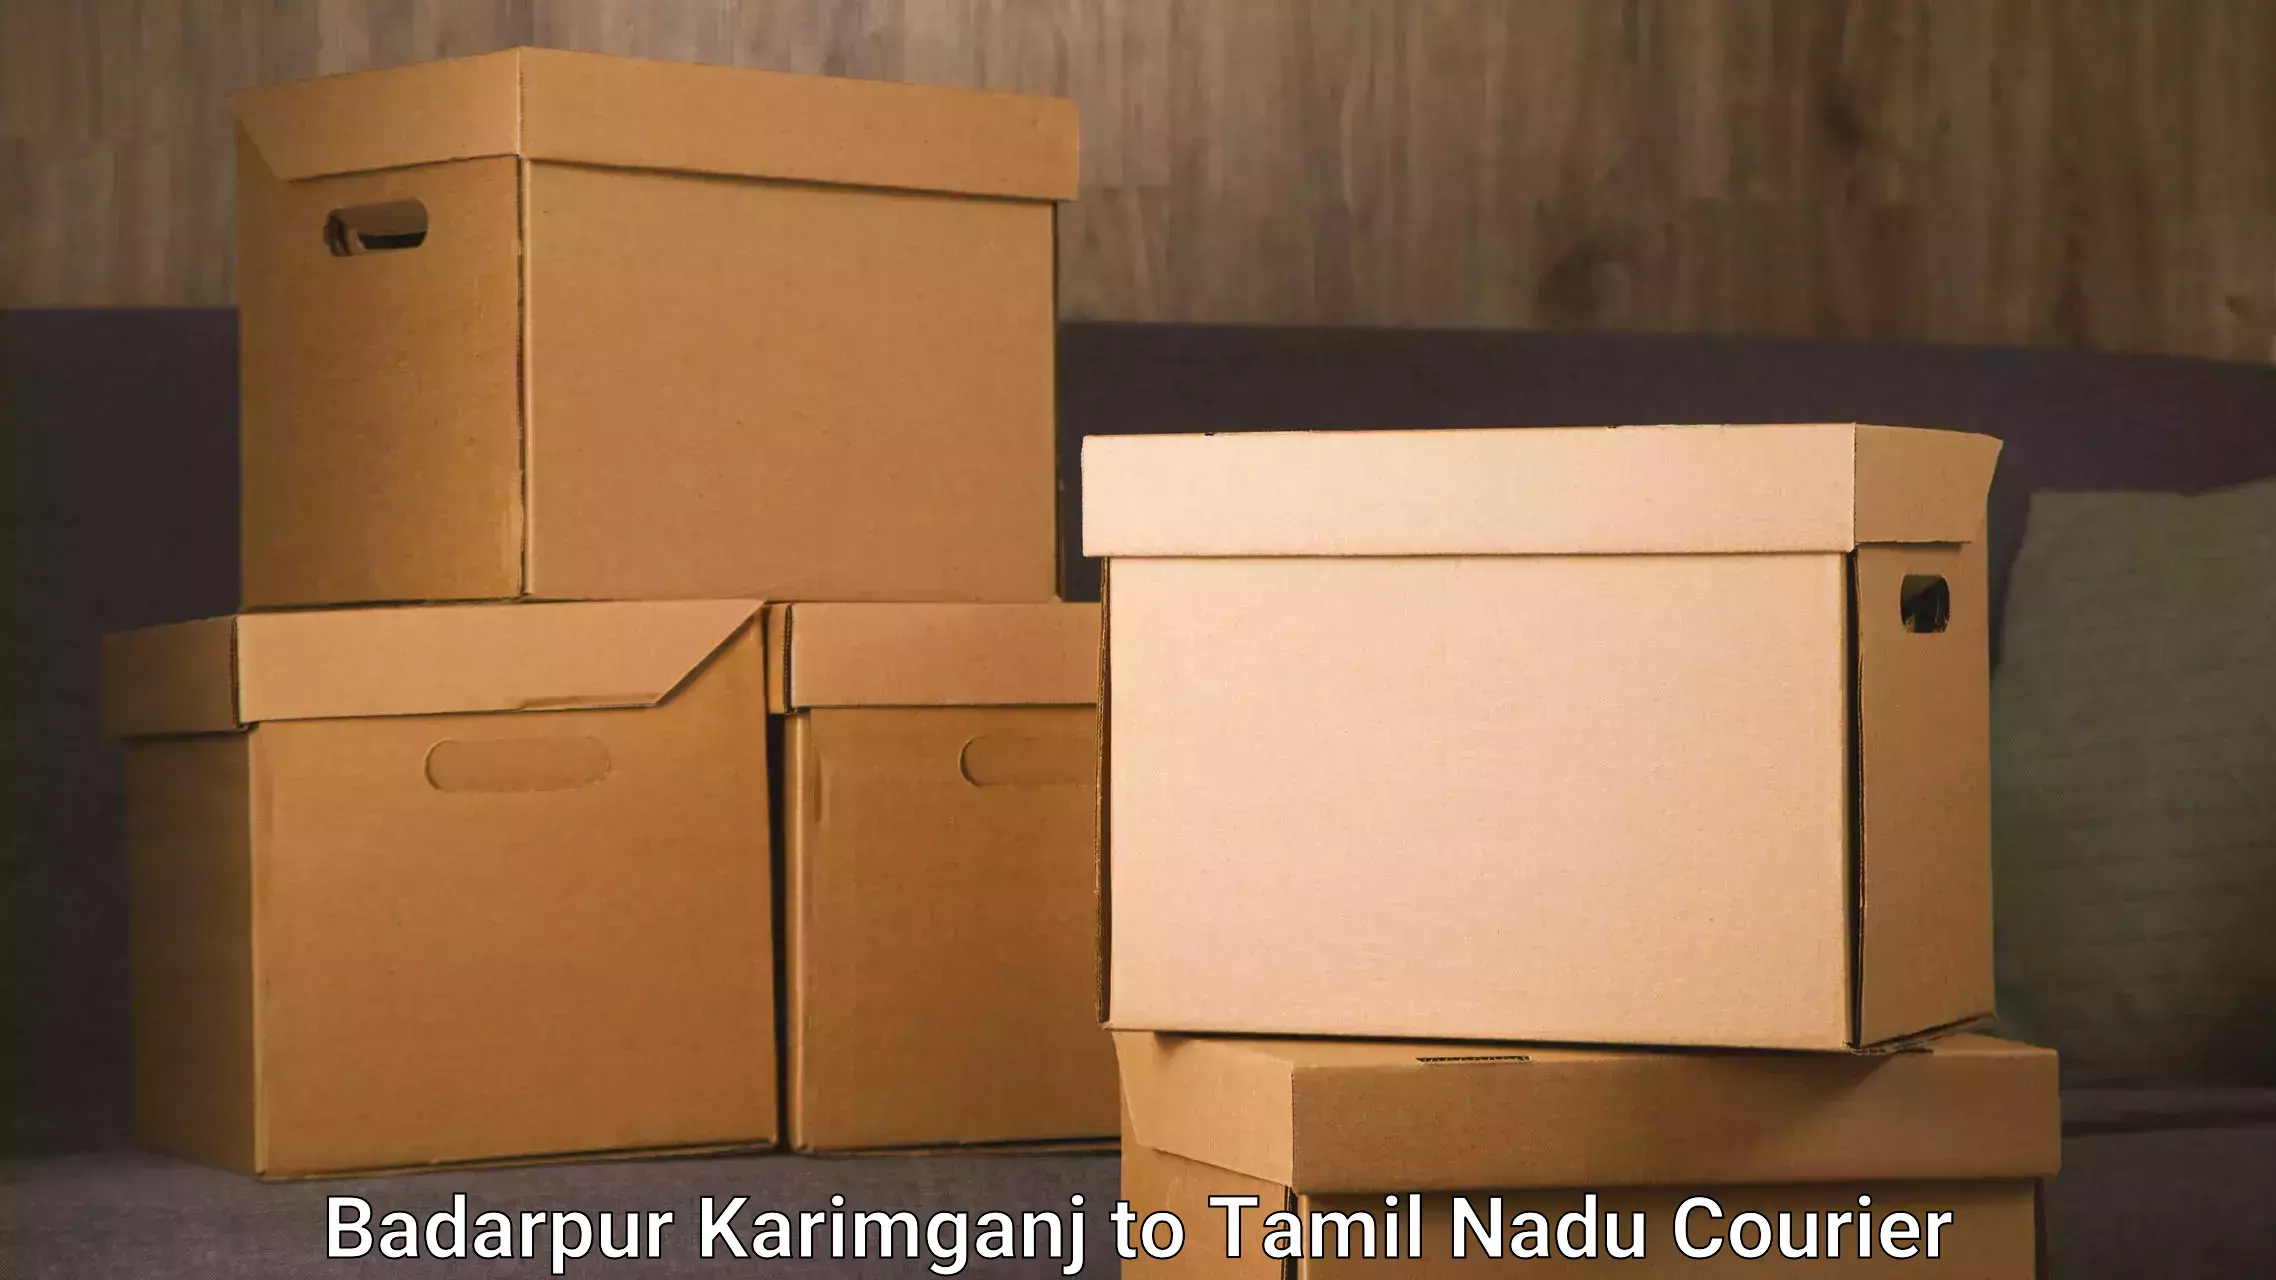 Package delivery network Badarpur Karimganj to Thondi